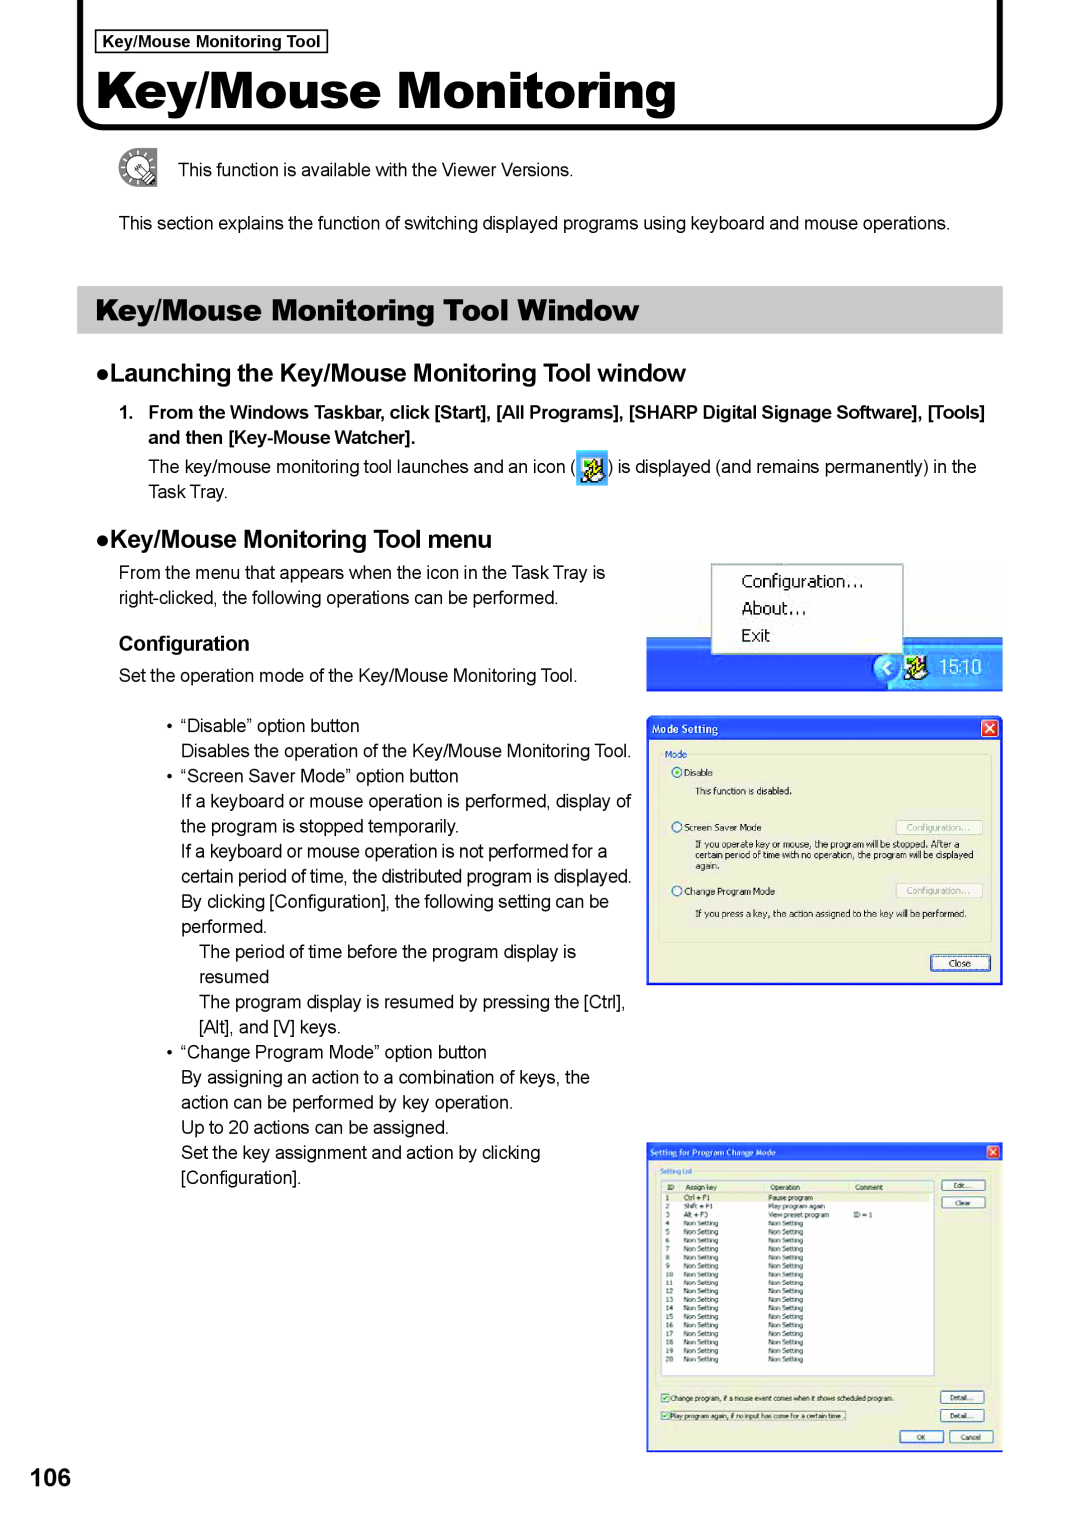 Sharp PNSV01 Key/Mouse Monitoring Tool Window, Launching the Key/Mouse Monitoring Tool window, Configuration 